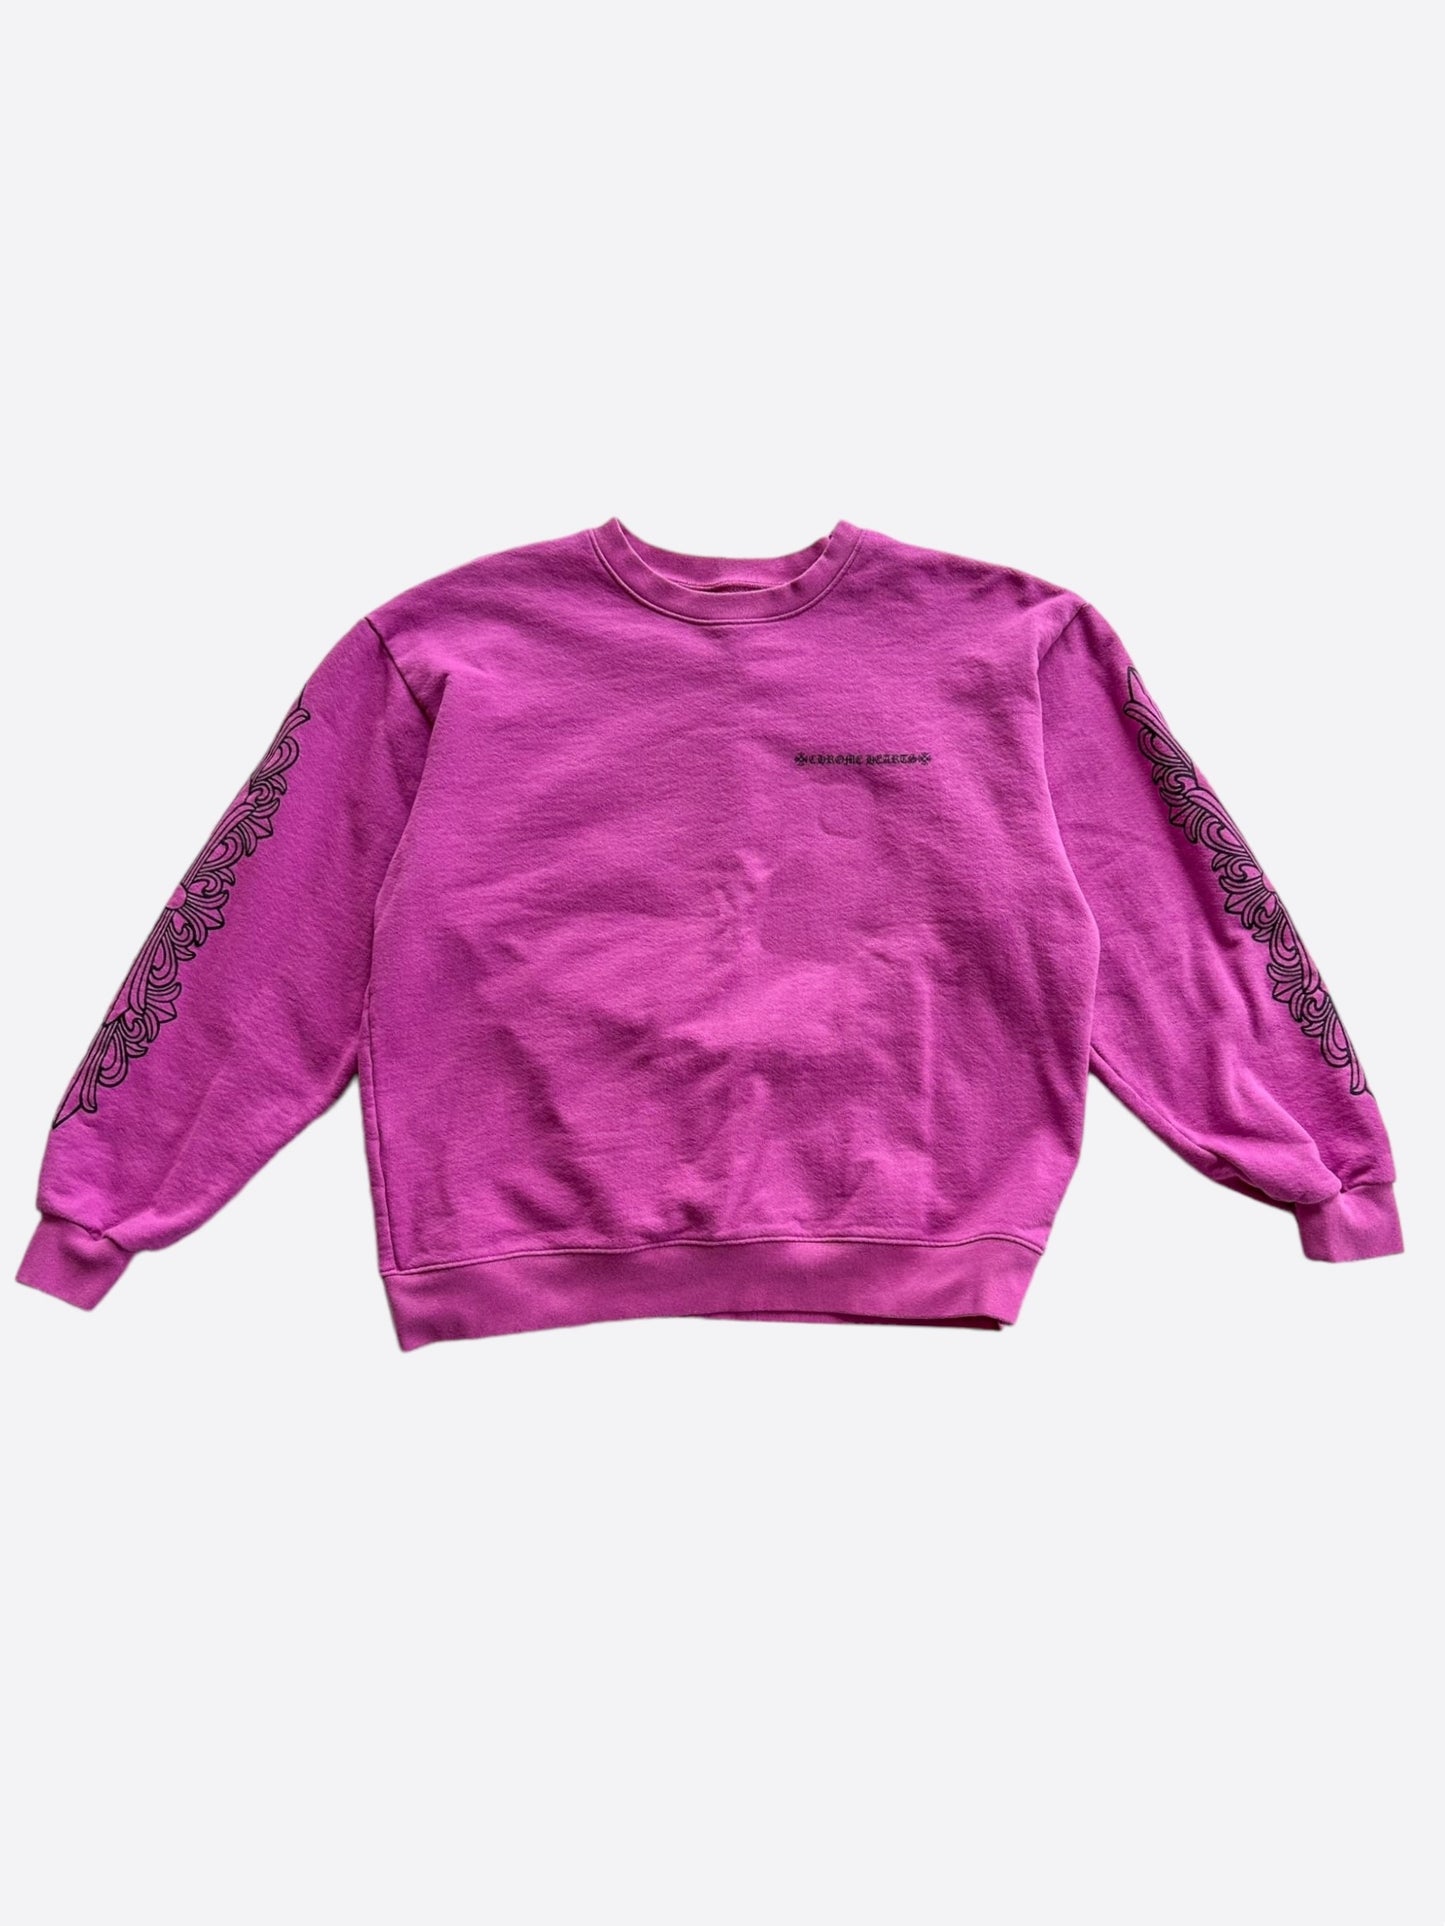 Chrome Hearts Matty Boy Purple Spider Web Sweater